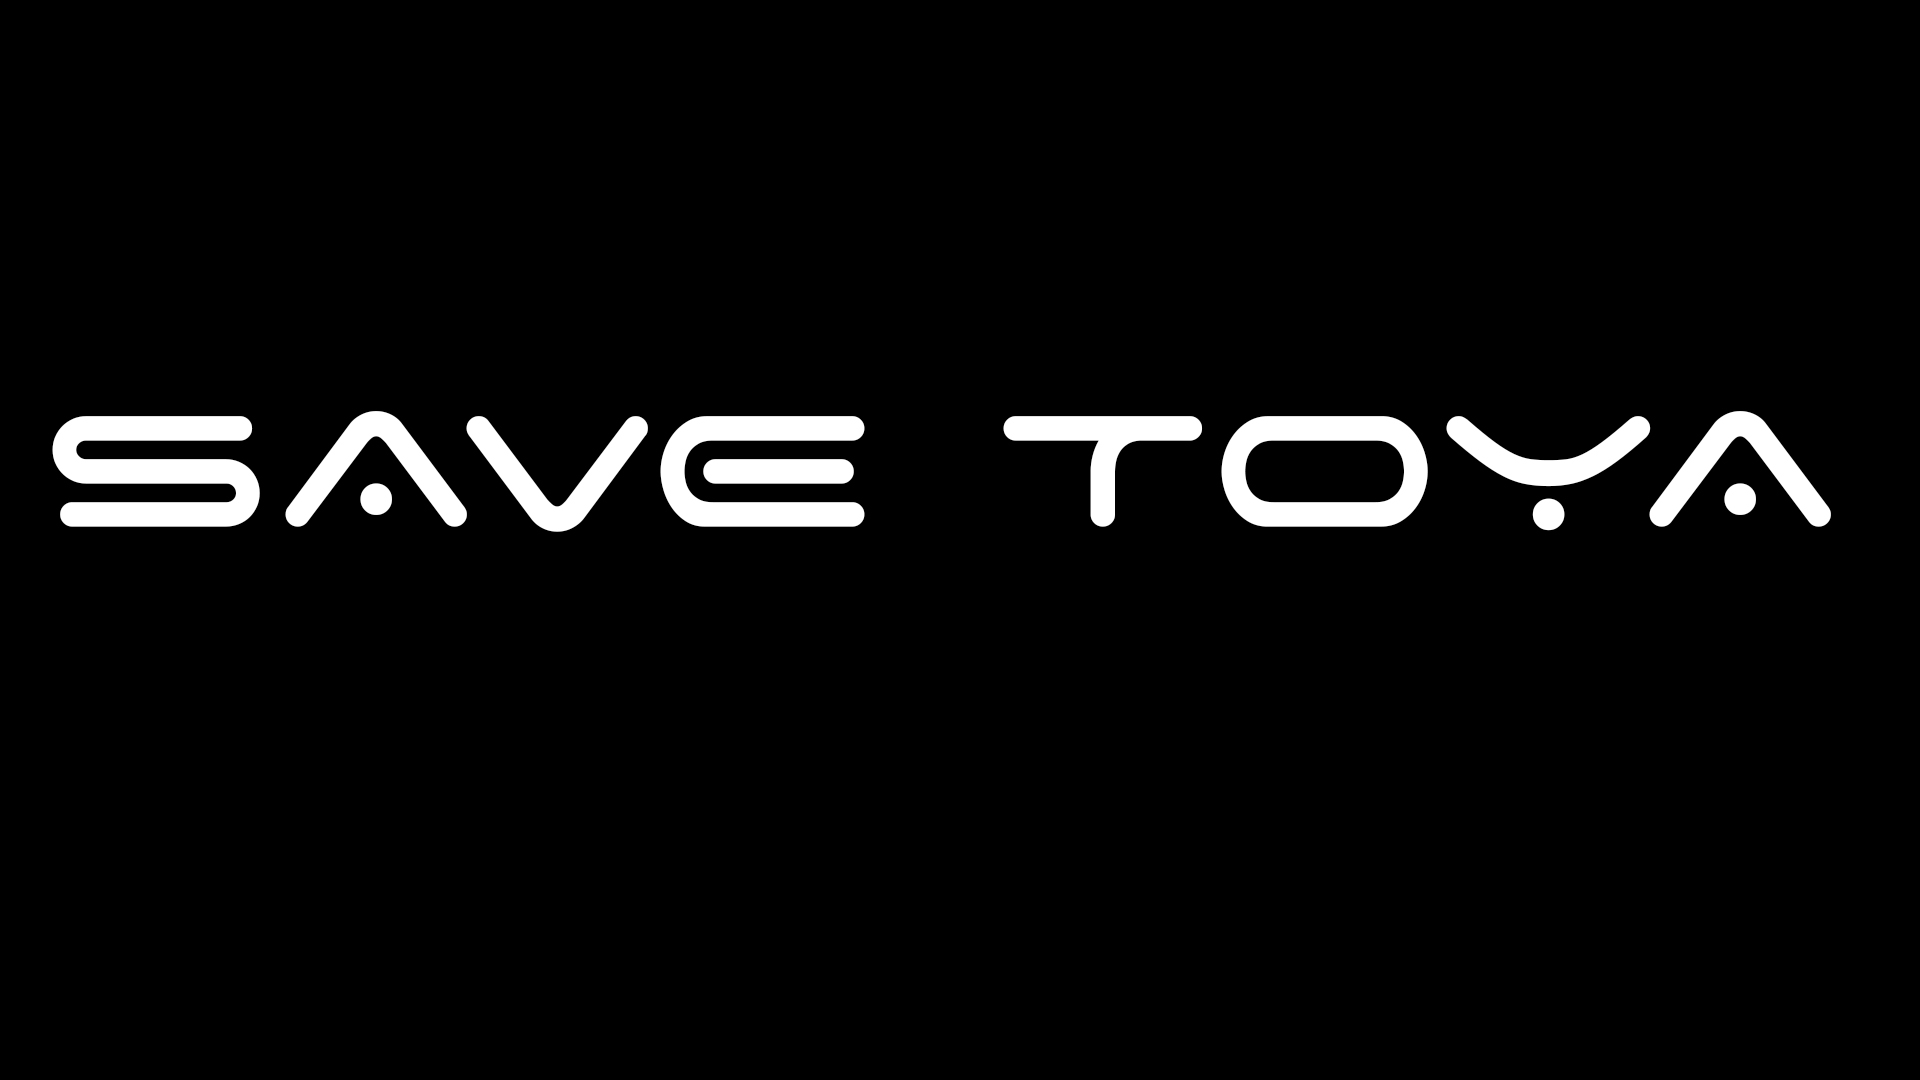 Save Toya